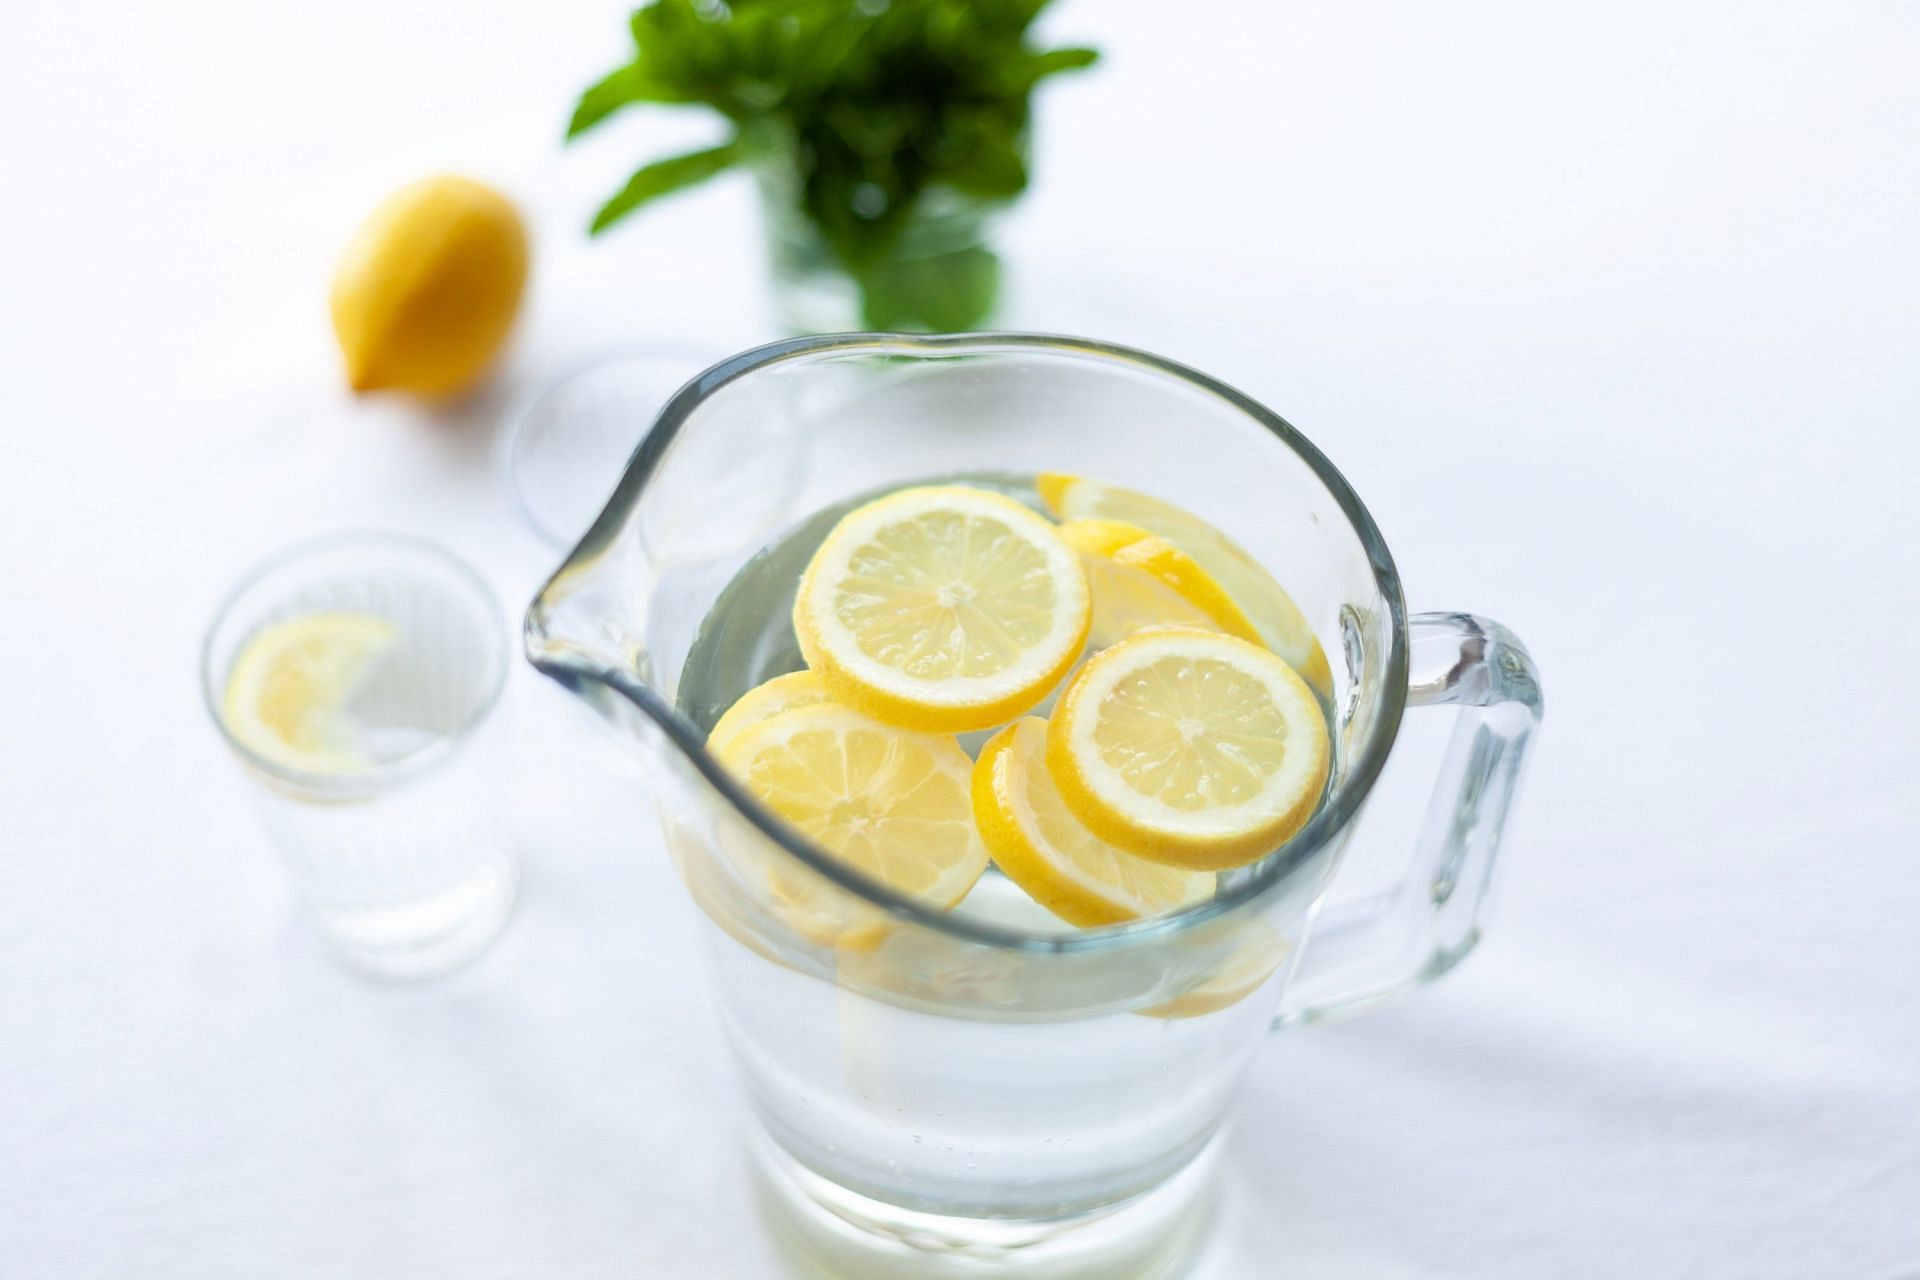 Warm lemon water is an effective natural remedy against constipation (Image via Pexels/Julia Zolotova)